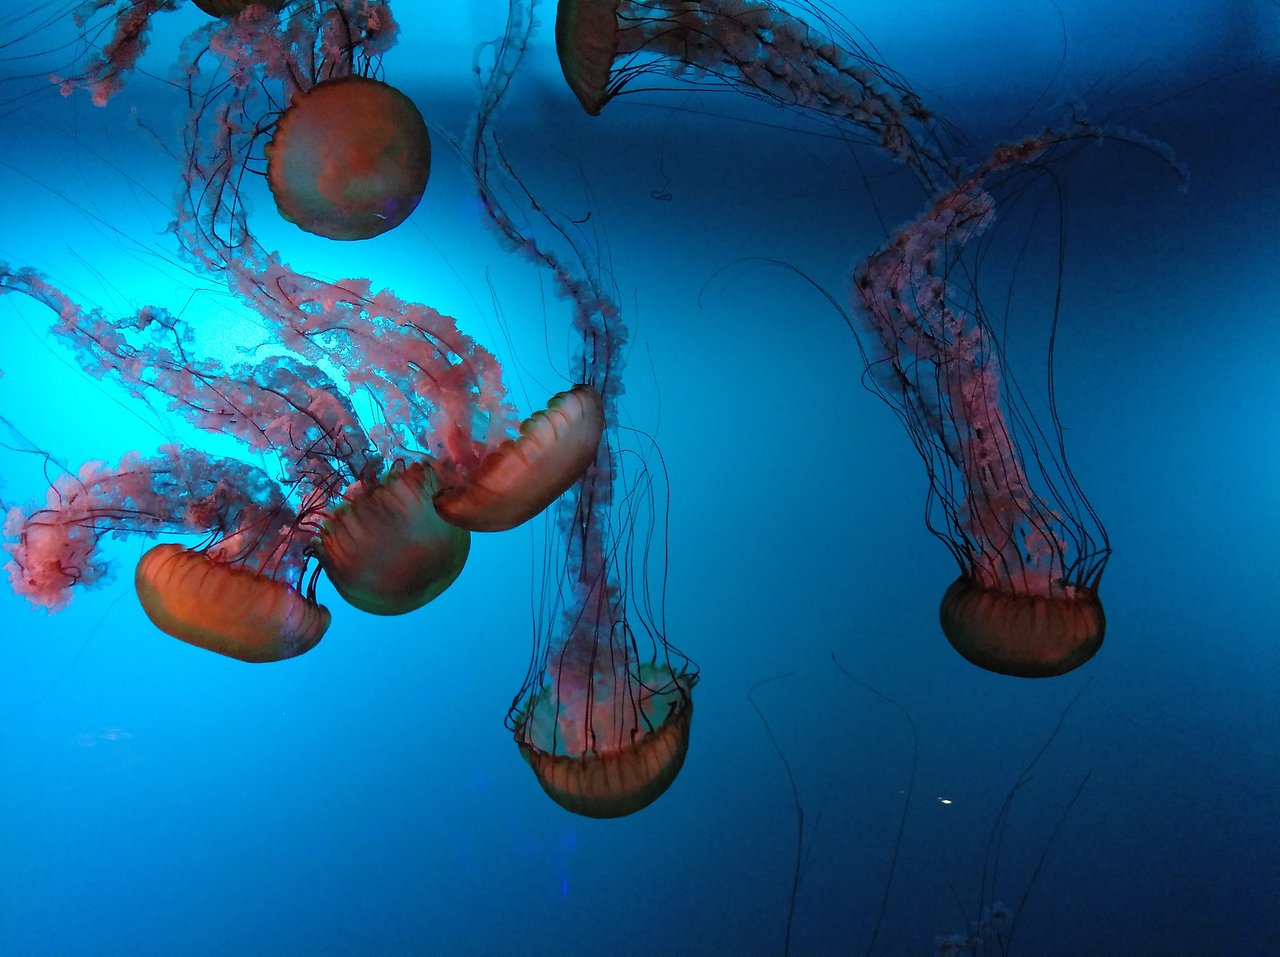 Jellyfish in Quebec aquarium, MyNaturePhotography challenge 12/09/19 PeakD